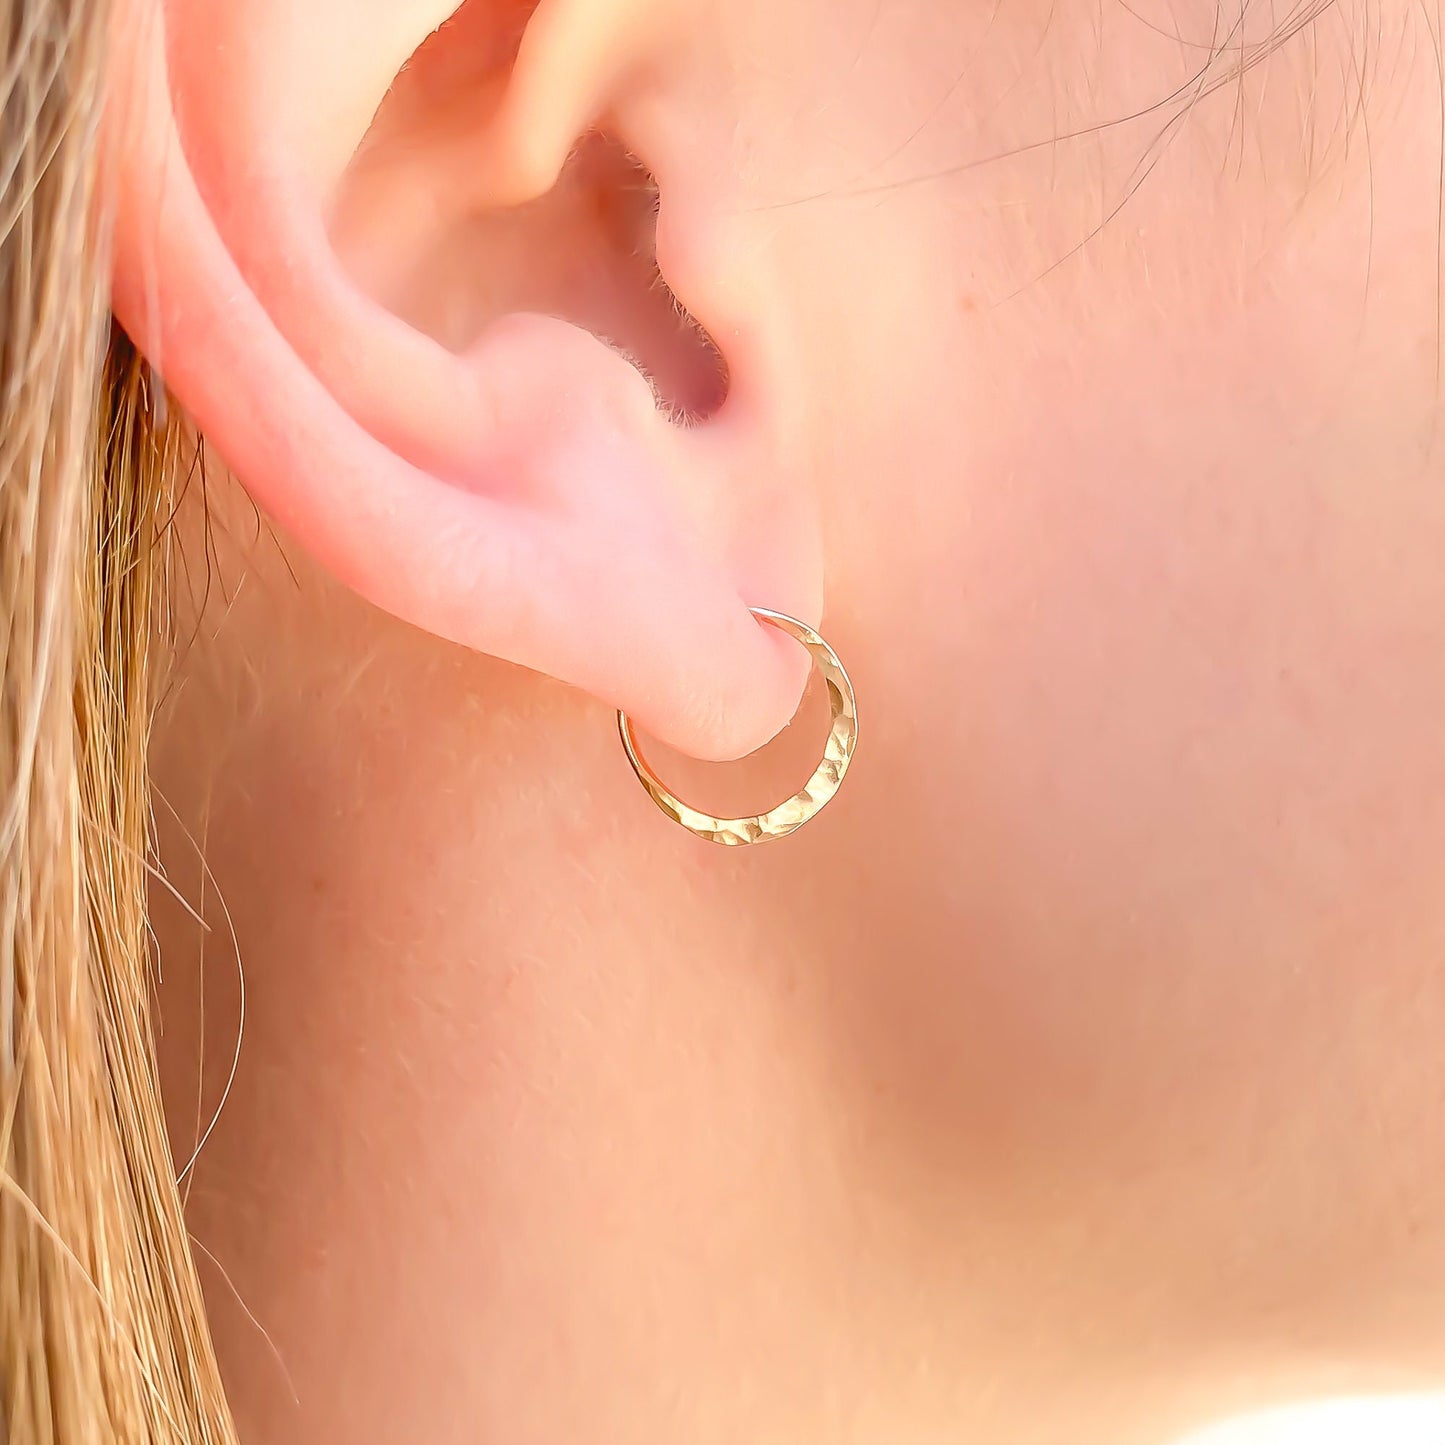 12mm Hammered Hoop Earrings, 14K Gold Filled